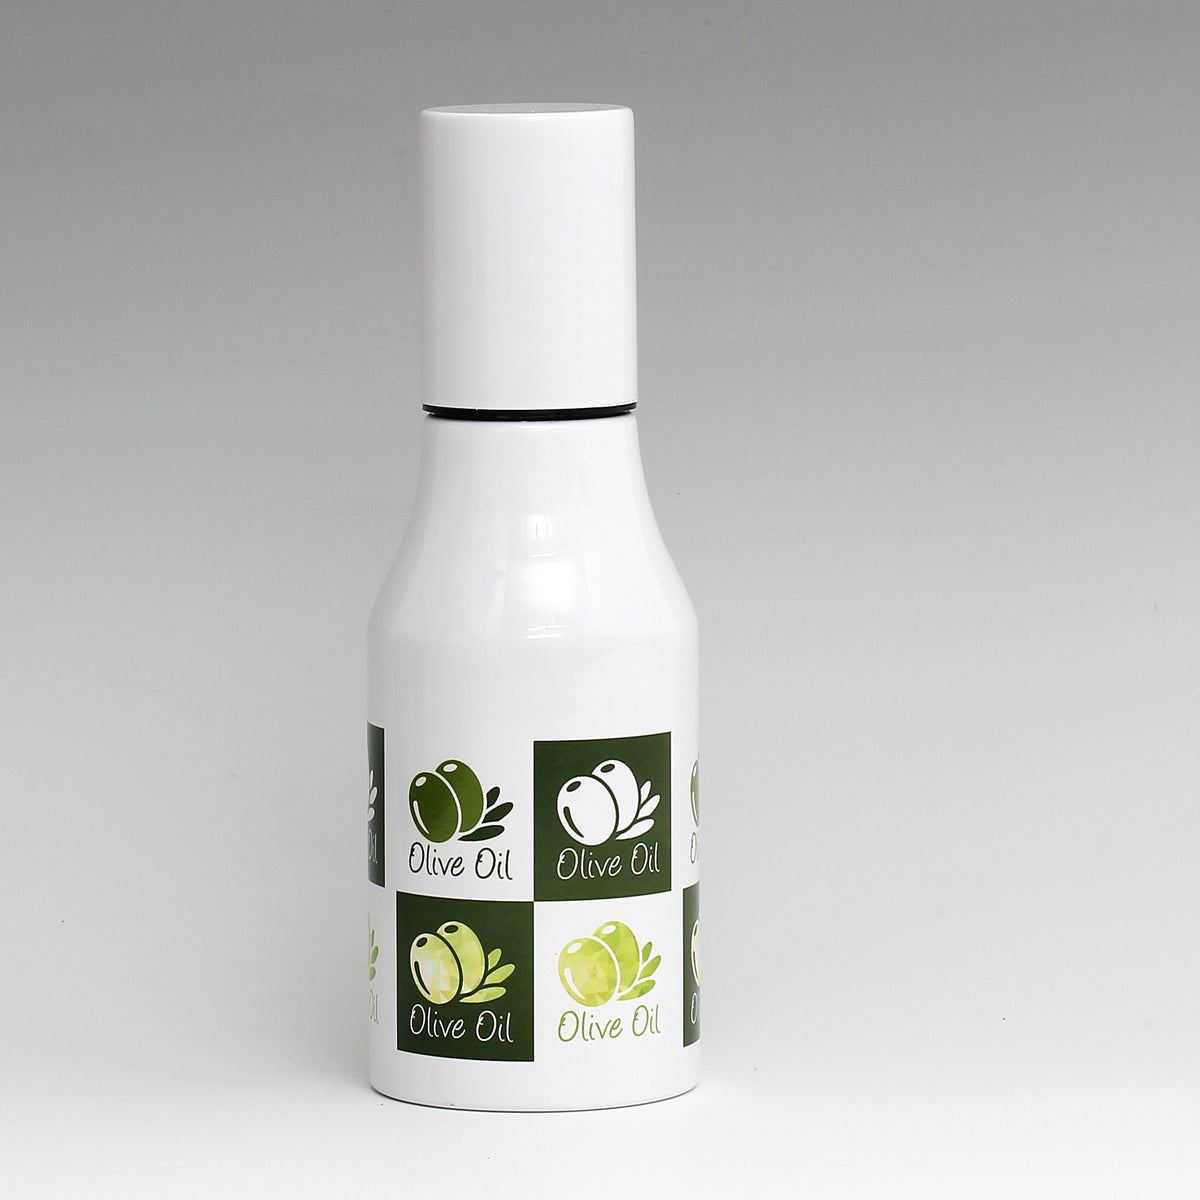 SUBLIMART: Olive Oil Dispenser with non-drip pourer and dust cover cap (Design 13)